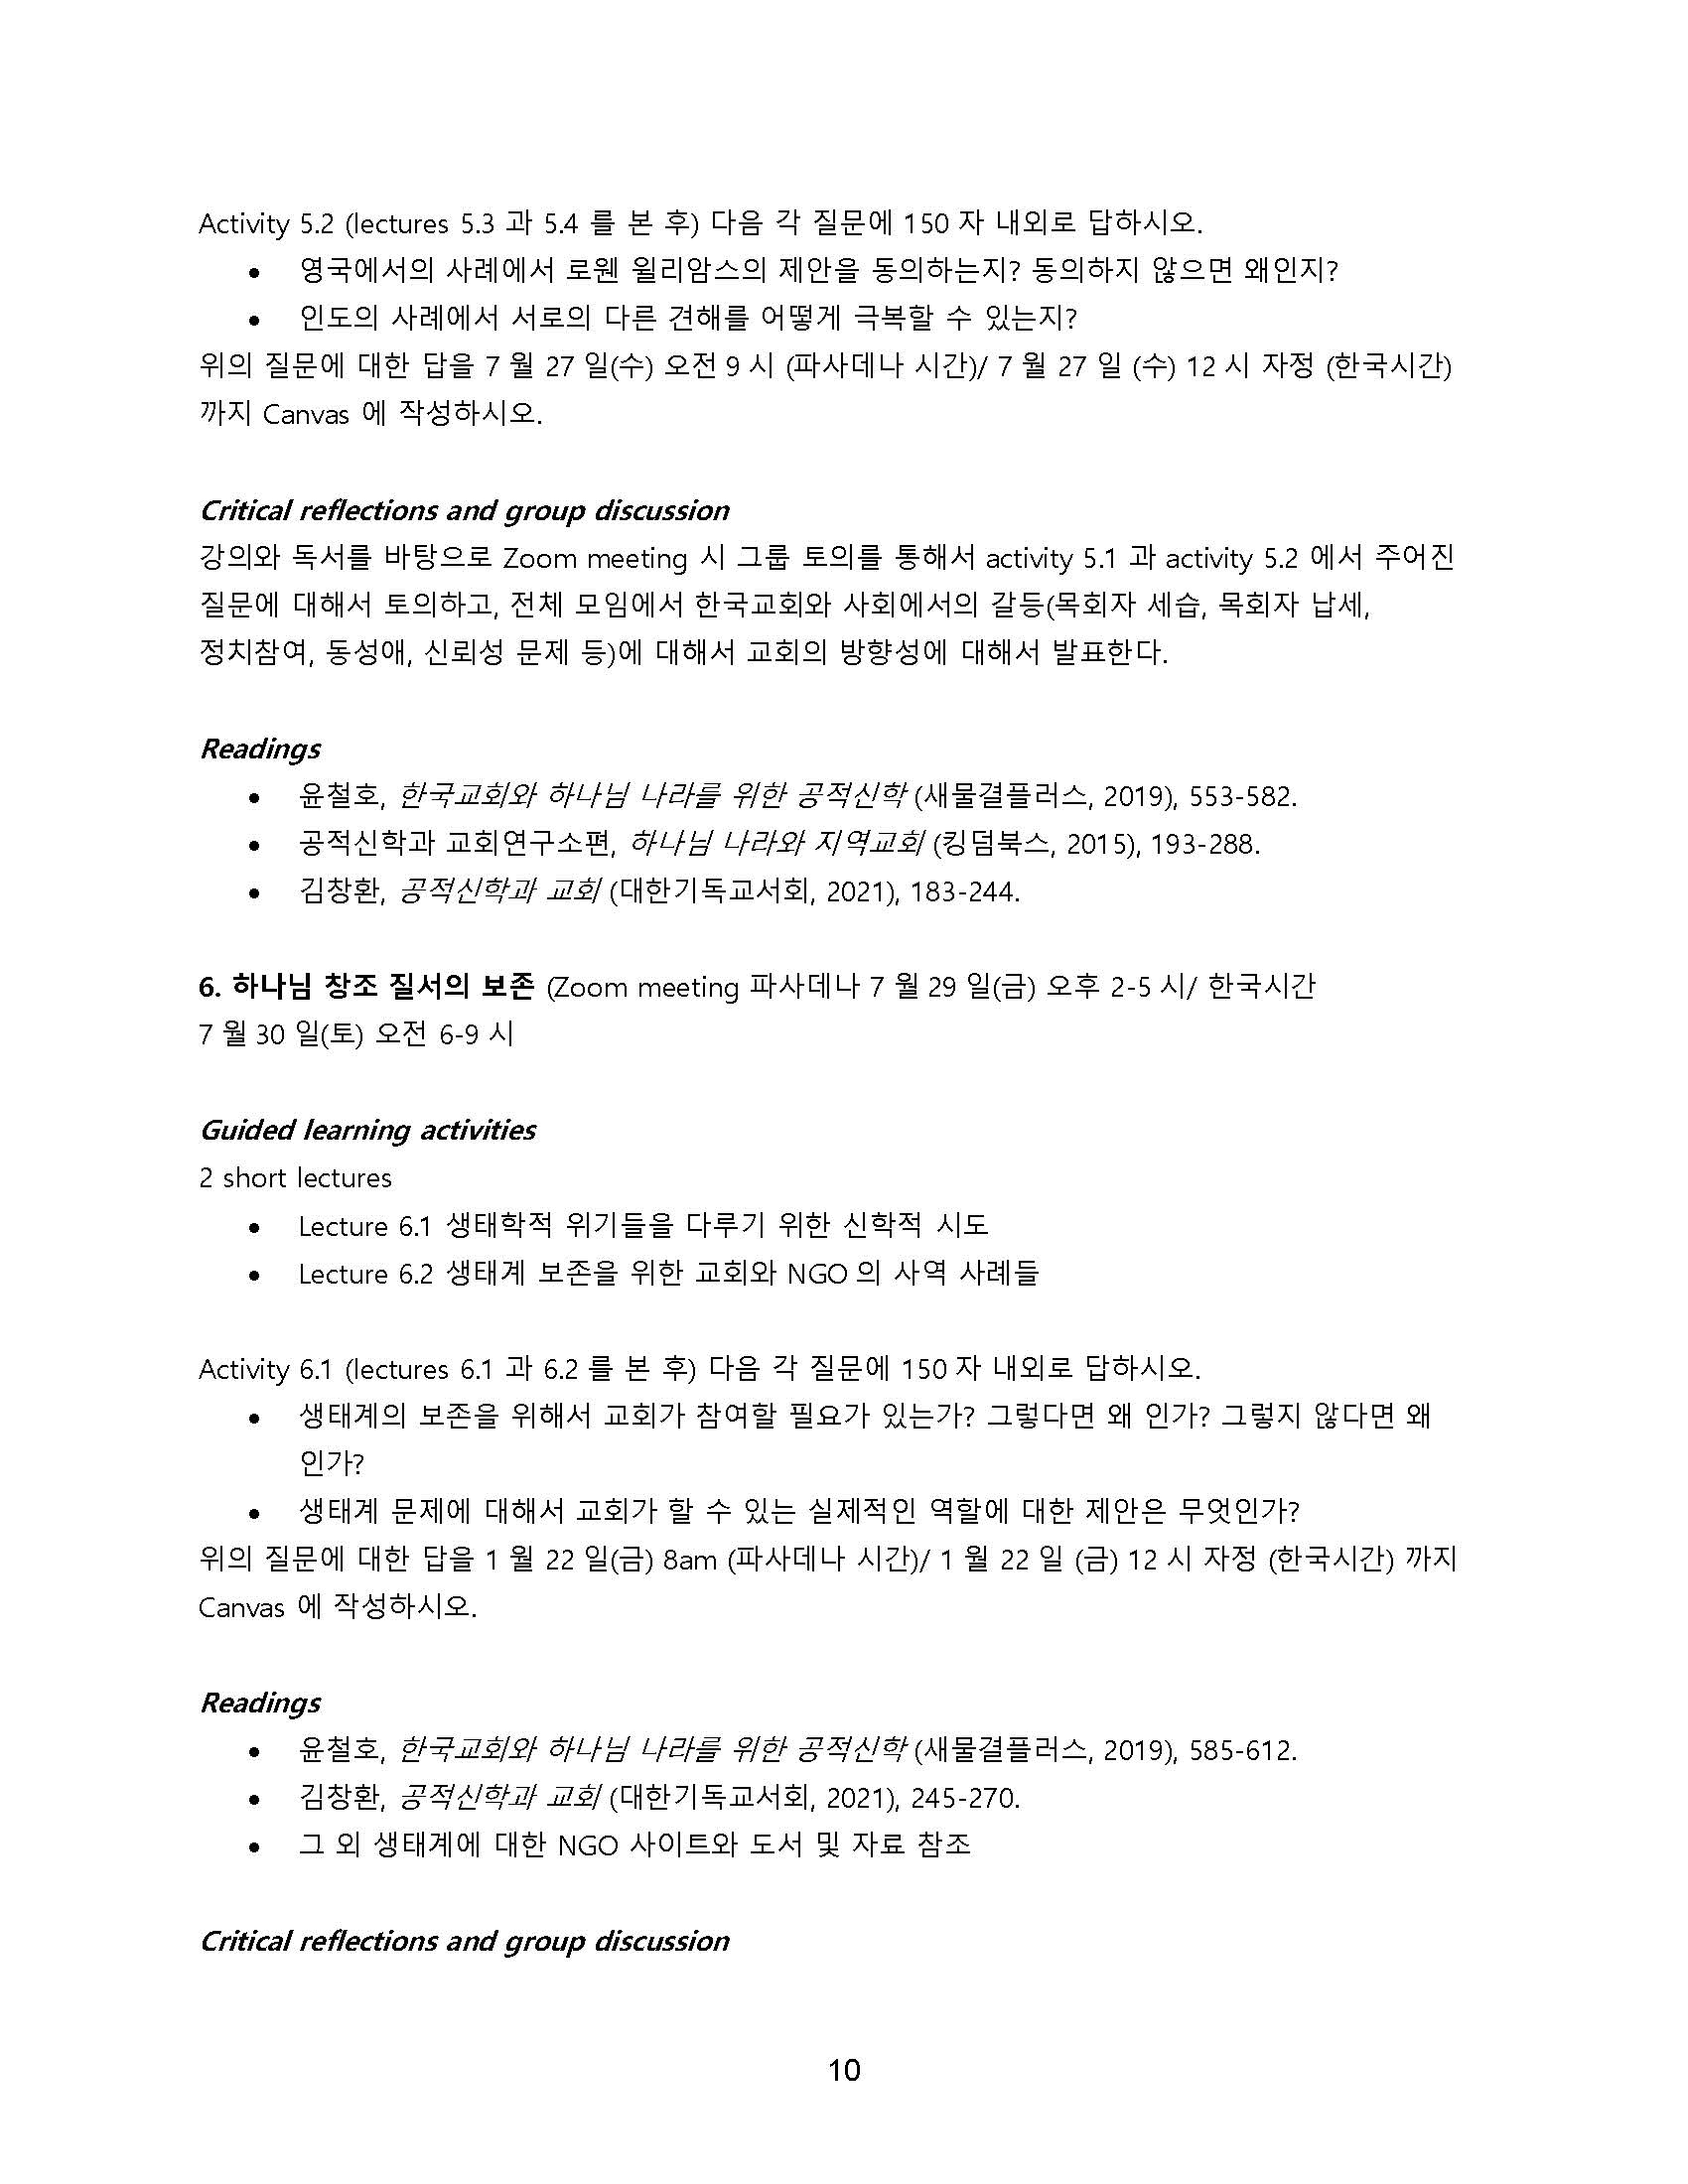 TH741 Public Theology - Korean - syllabus (1)_Page_10.jpg